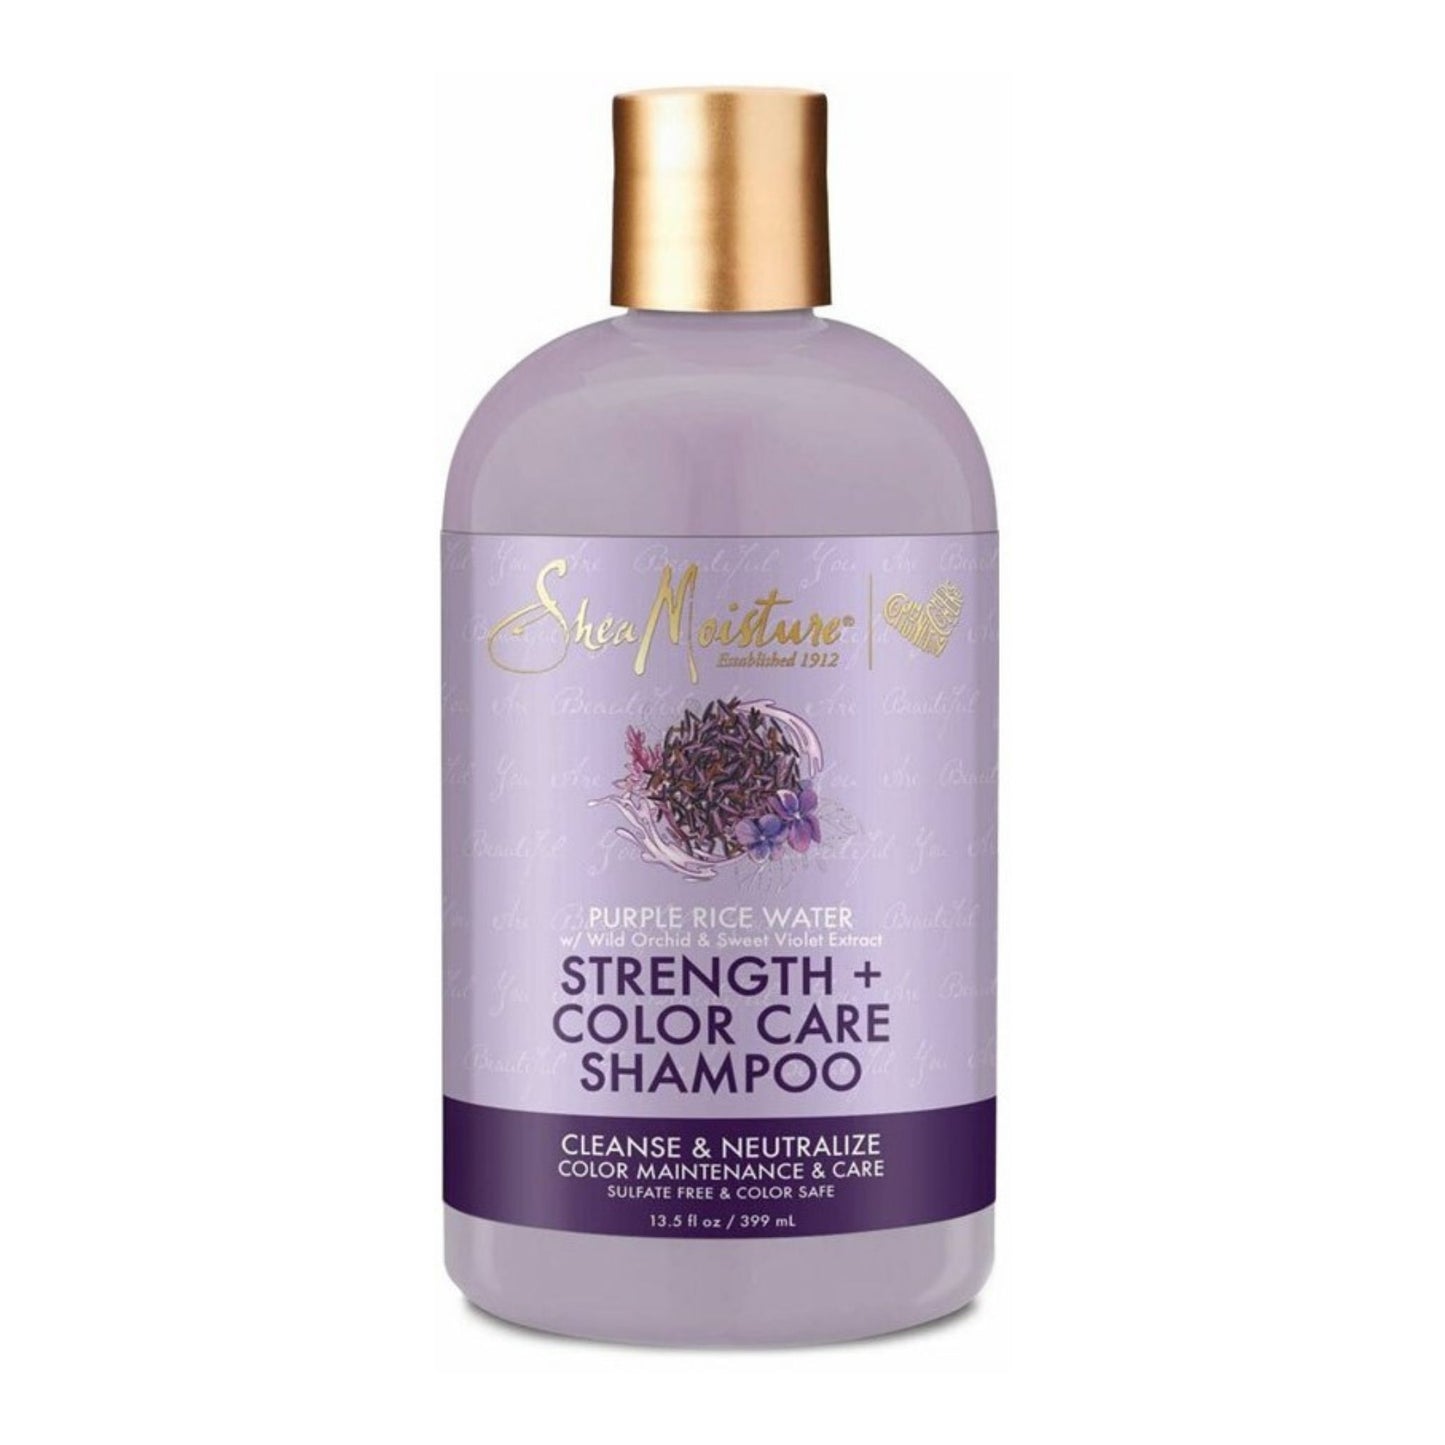 SheaMoisture Purple Rice Water Güçlendirici Renk Bakımı Şampuan 399 ml